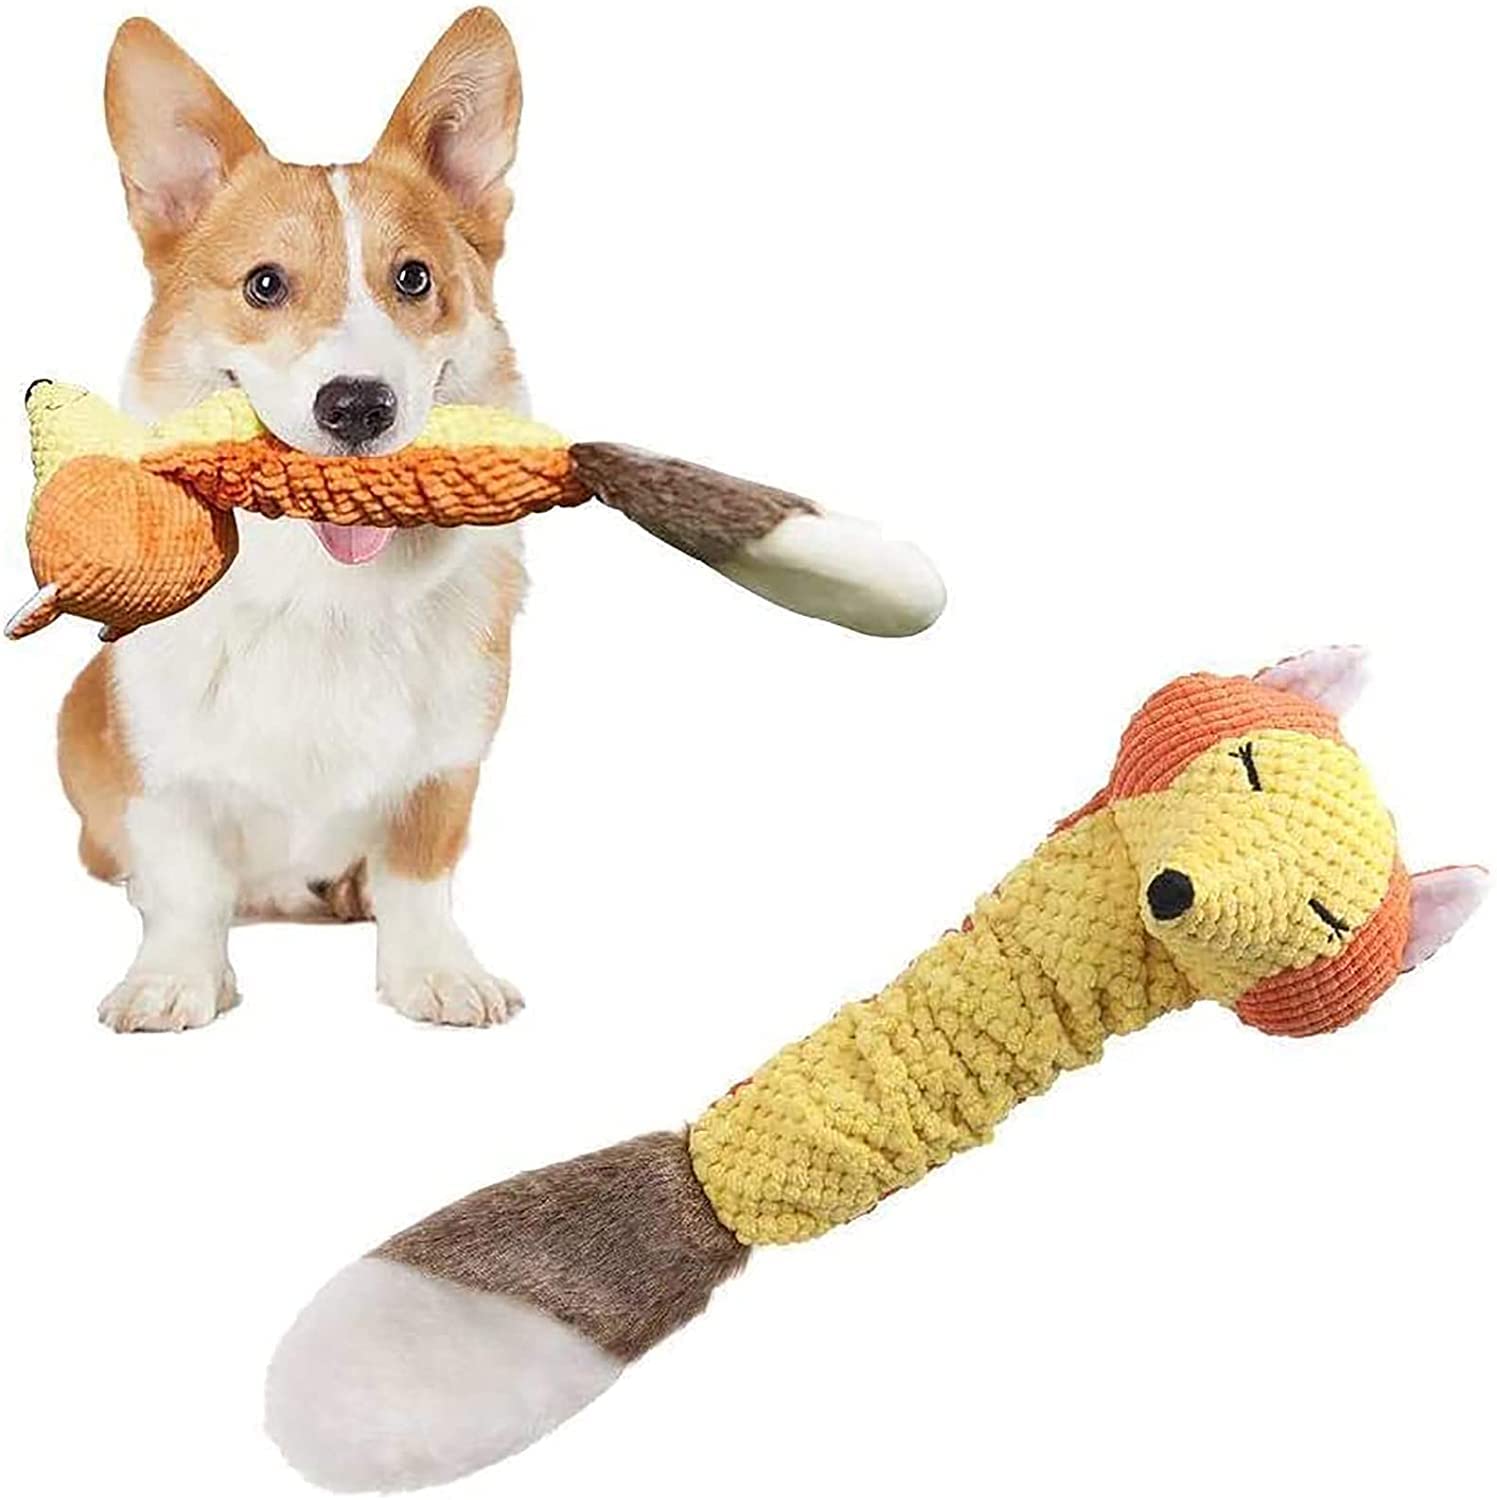 EETOYS Market Leader PET Lover Stuffless Squeaky Plush Animal Interactive Dog Toy (Fox)